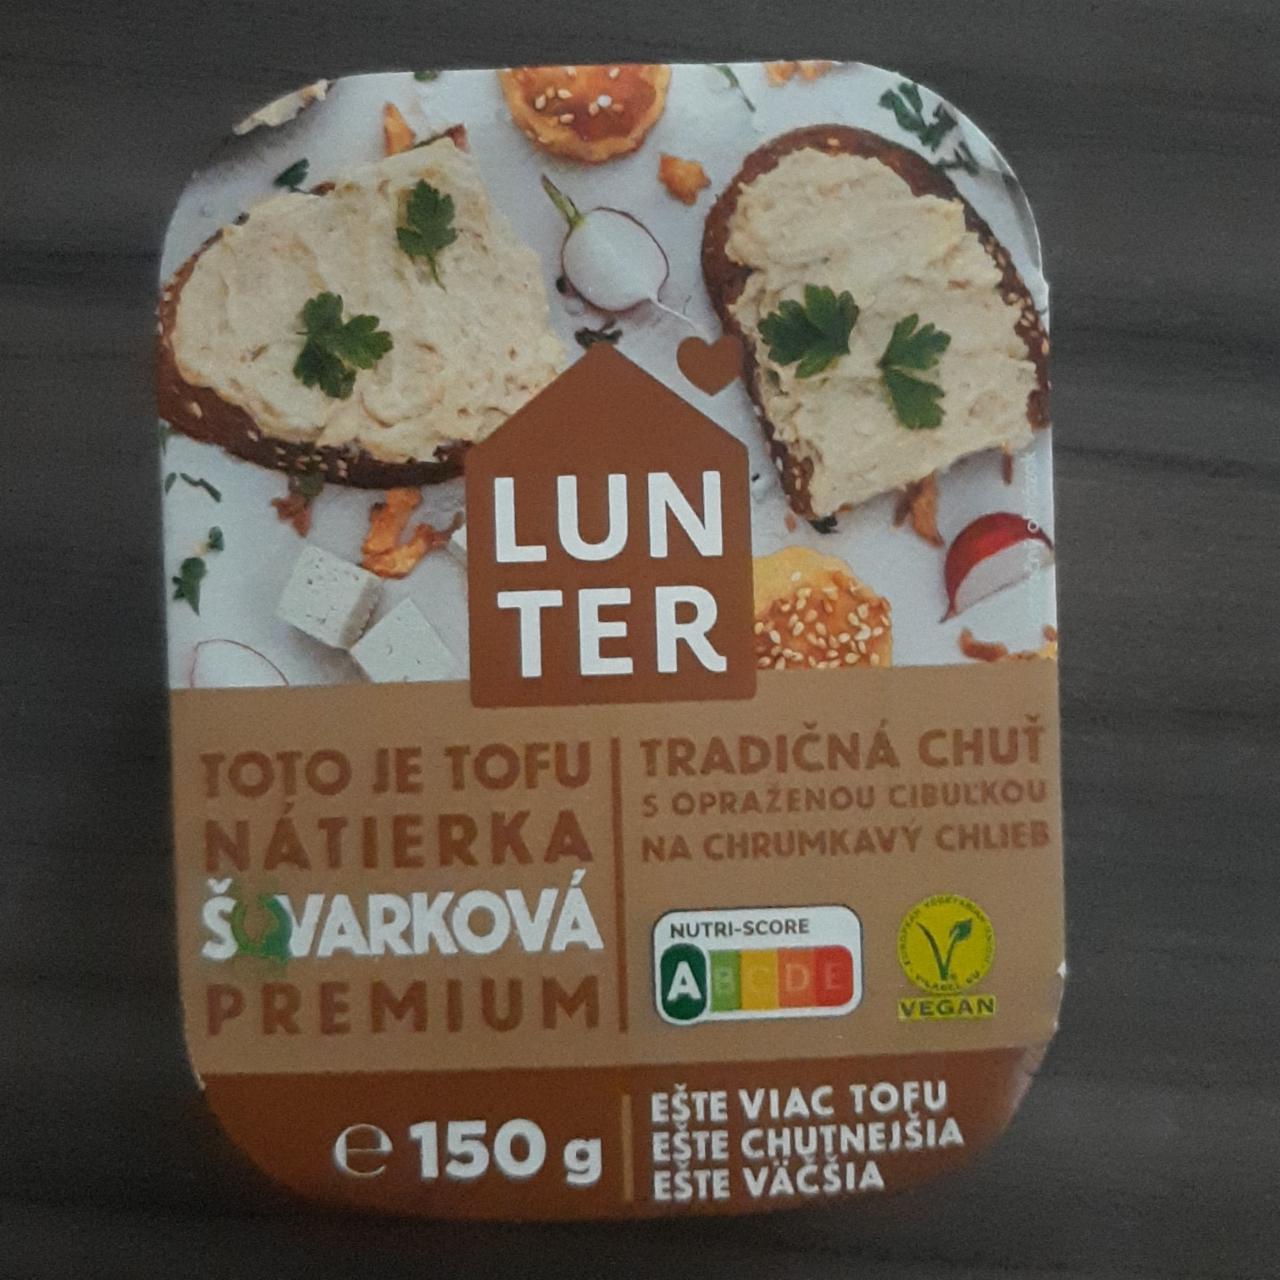 Fotografie - Tofu nátierka šqvarková Premium Lunter